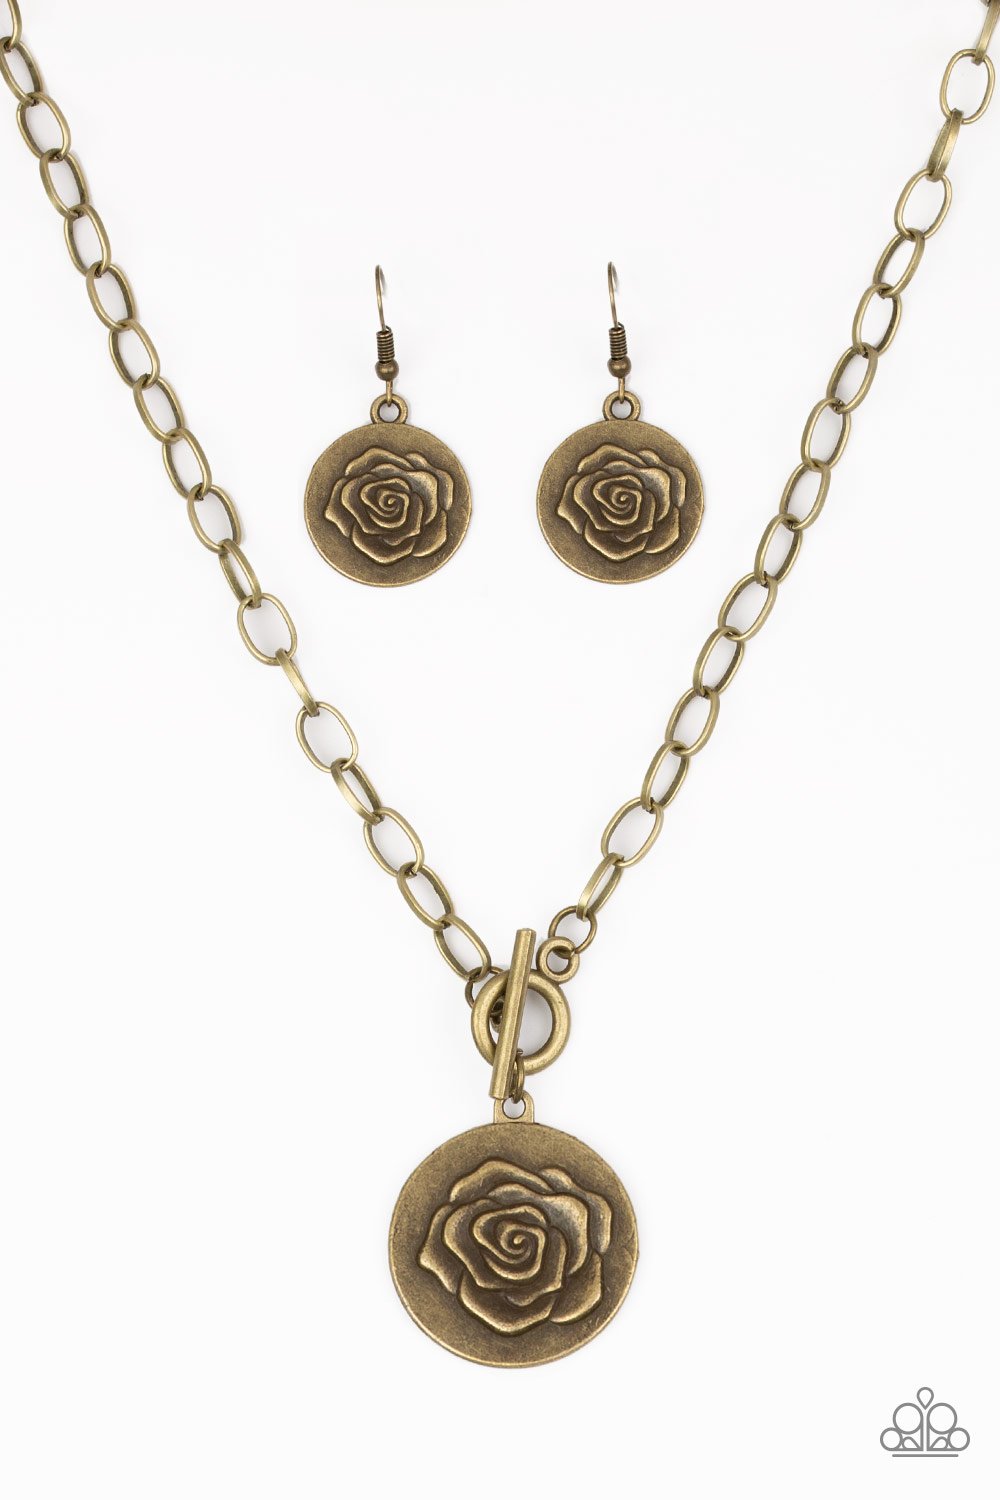 Beautifully Belle Brass Necklace freeshipping - JewLz4u Gemstone Gallery